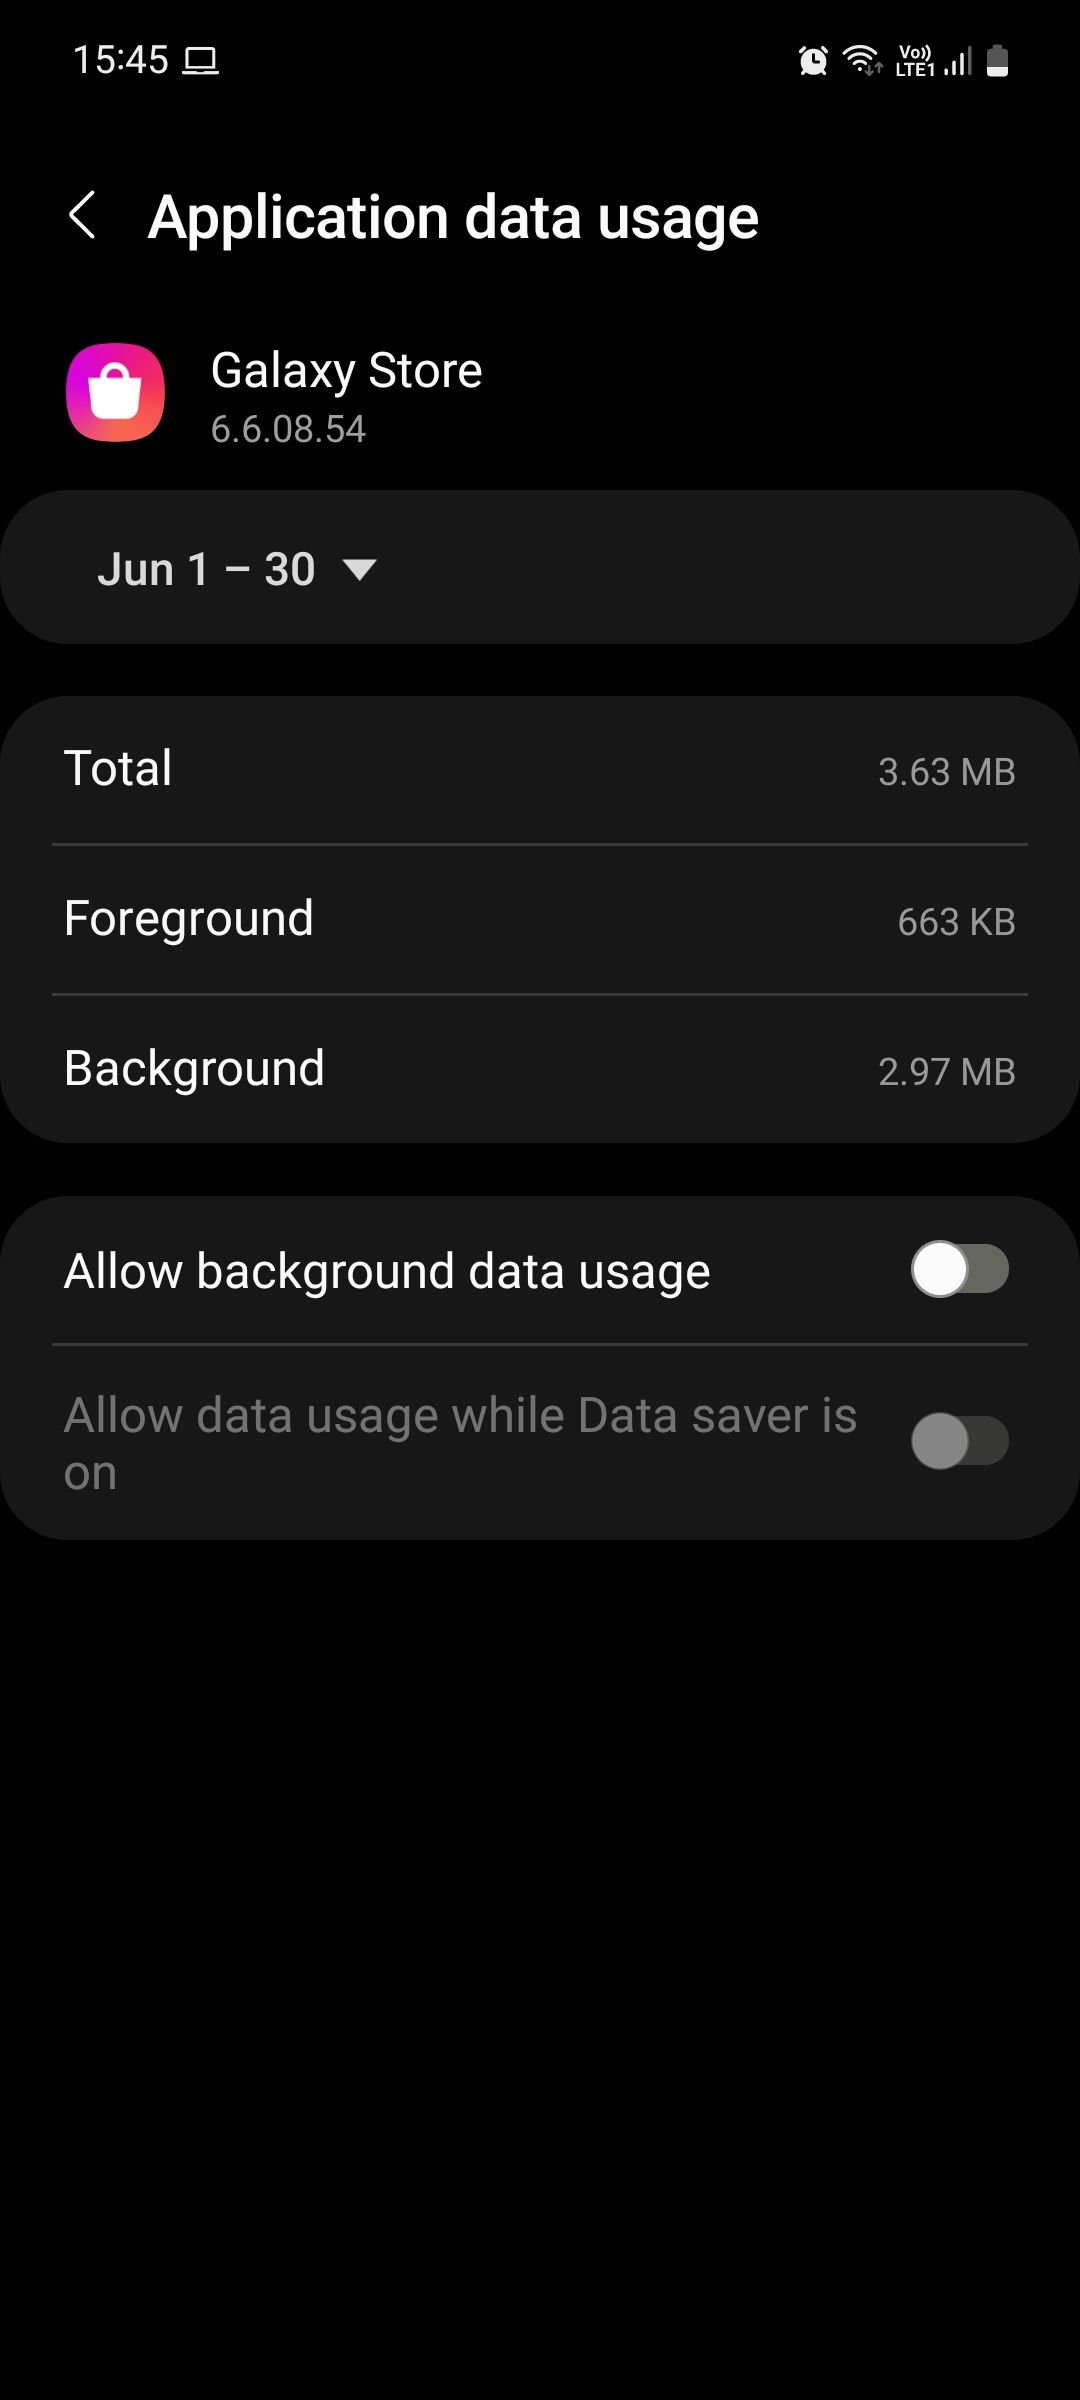 Samsung Galaxy Store application data usage